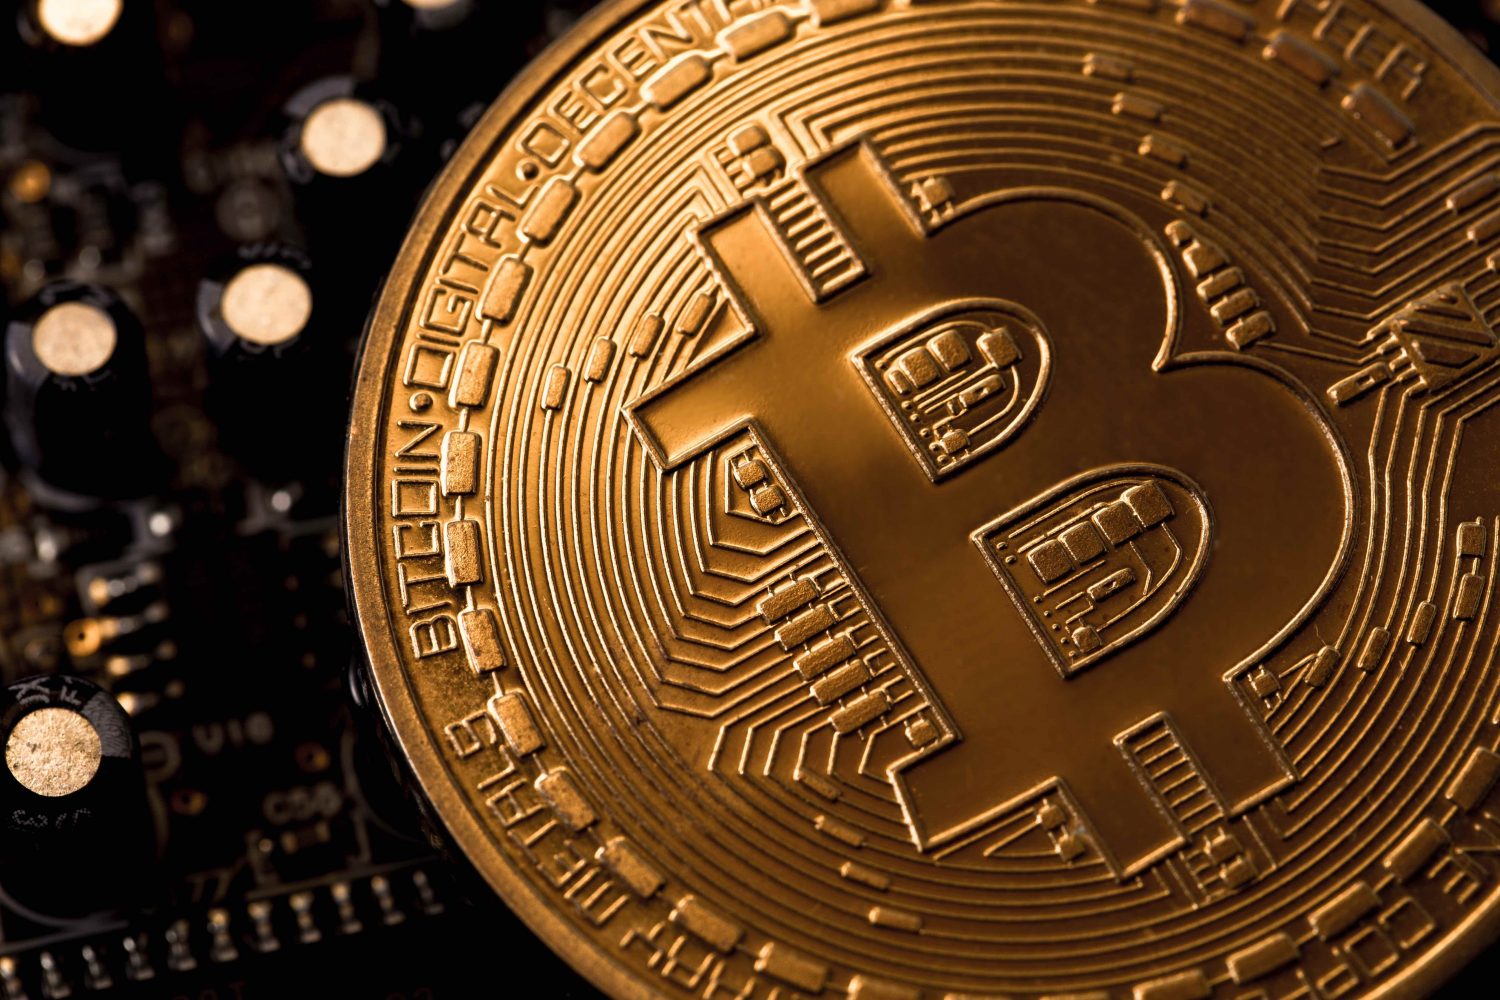 Valdeandemagico bitcoins ethereum to bank account